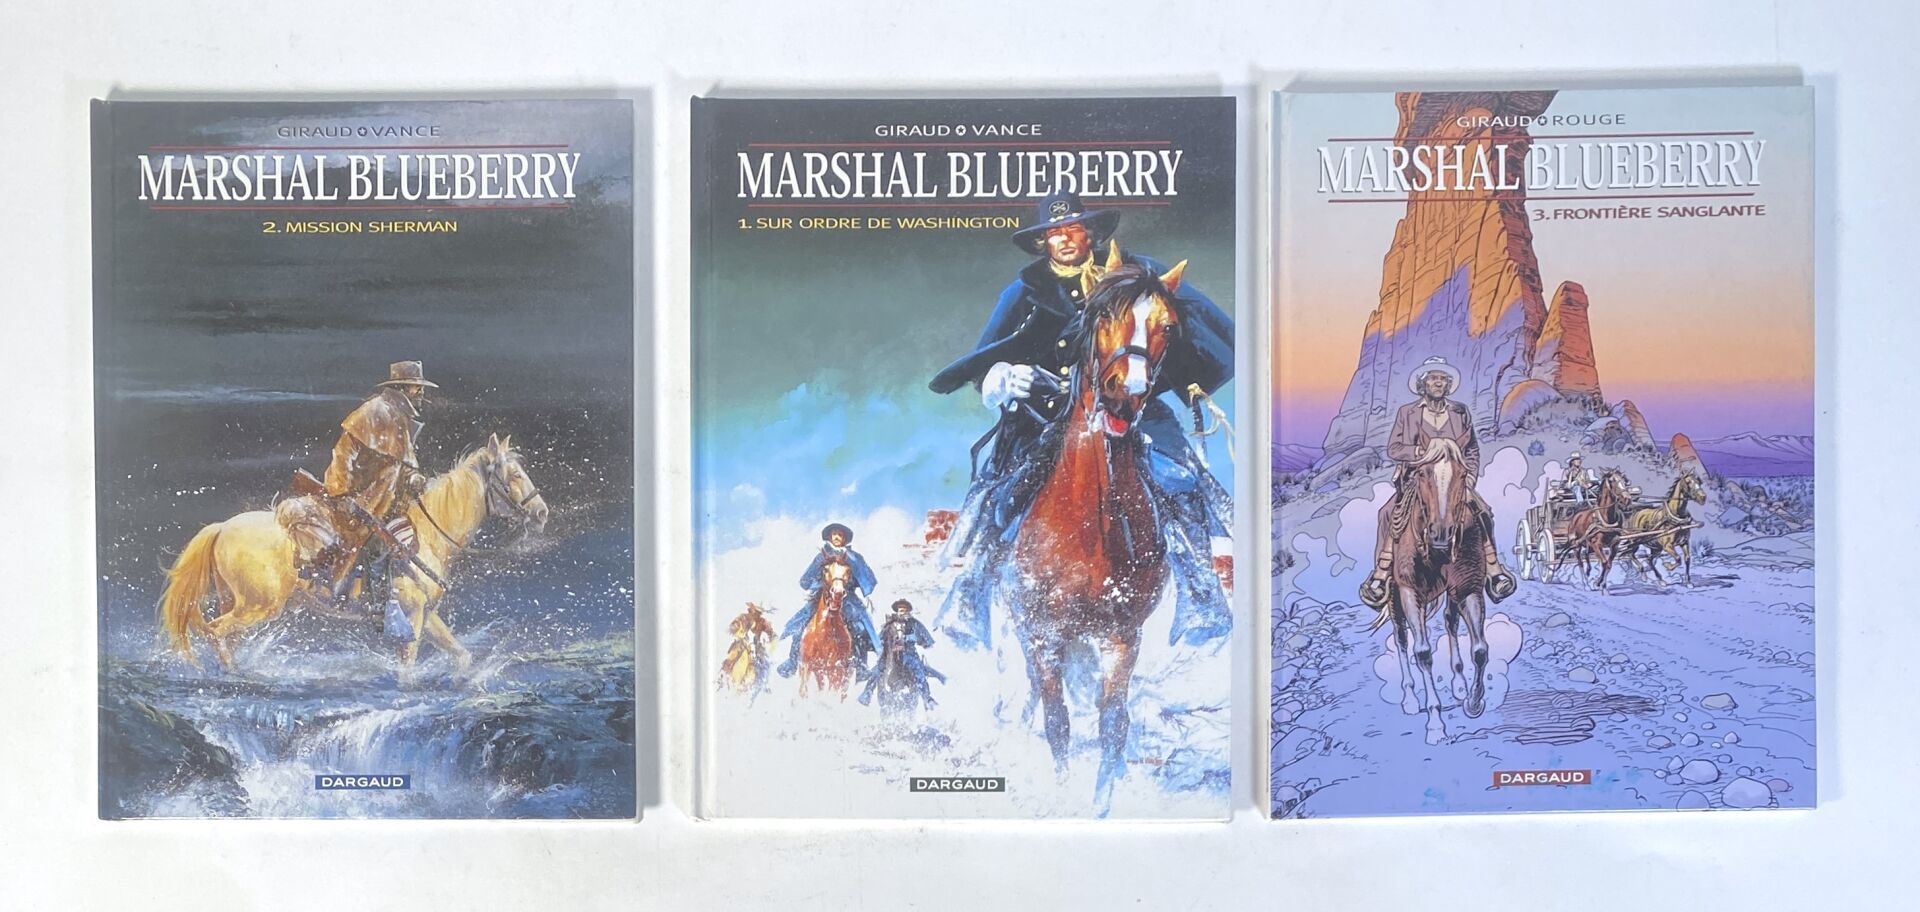 Null GIRAUD & VANCE - MARSHAL BLUEBERRY
Lot de 3 albums de Marshal Blueberry aux&hellip;